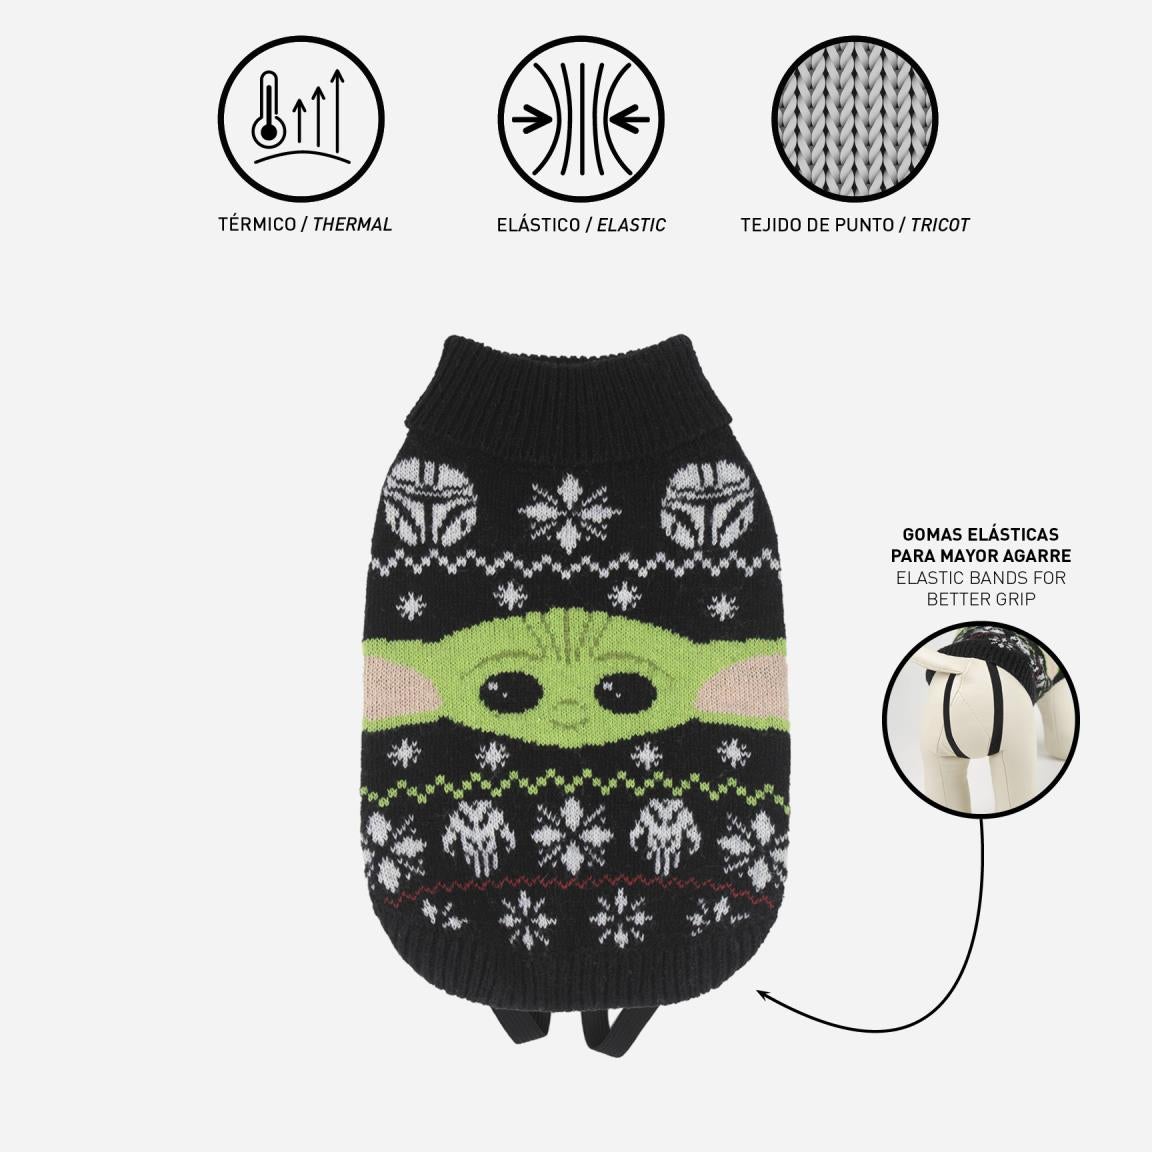 Star Wars - The Mandalorian Knitted Dog Sweater Grogu - darkling.be